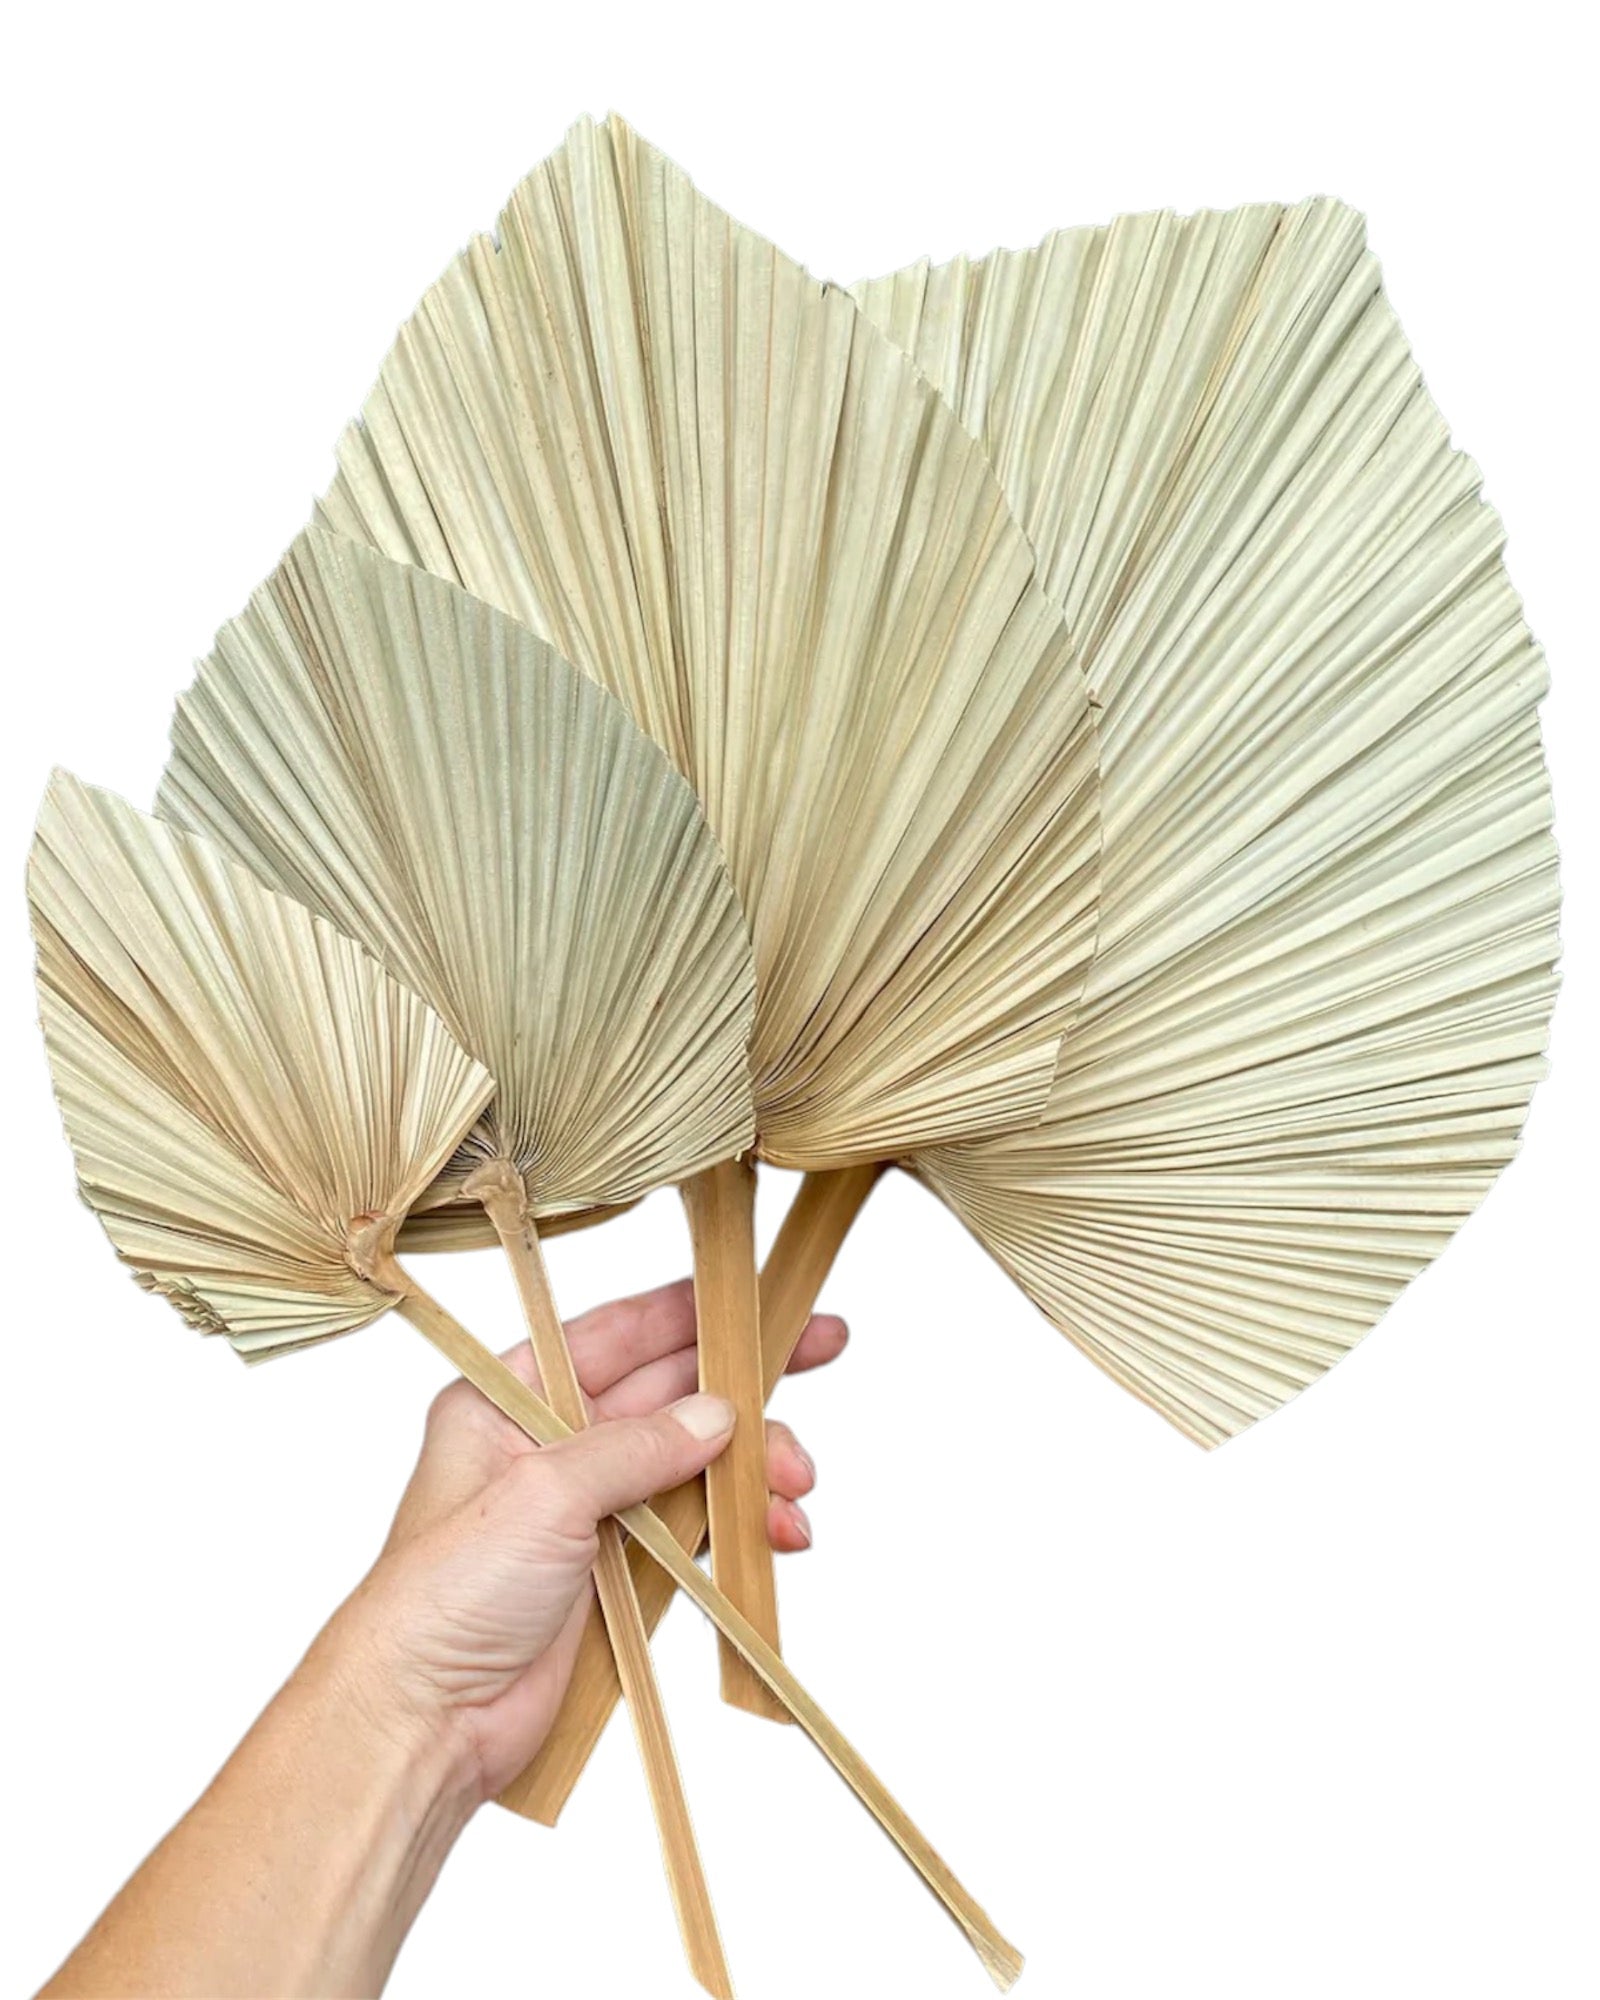 Palm - Perfect Palm - Natural Spear 15cm - 1 Stem